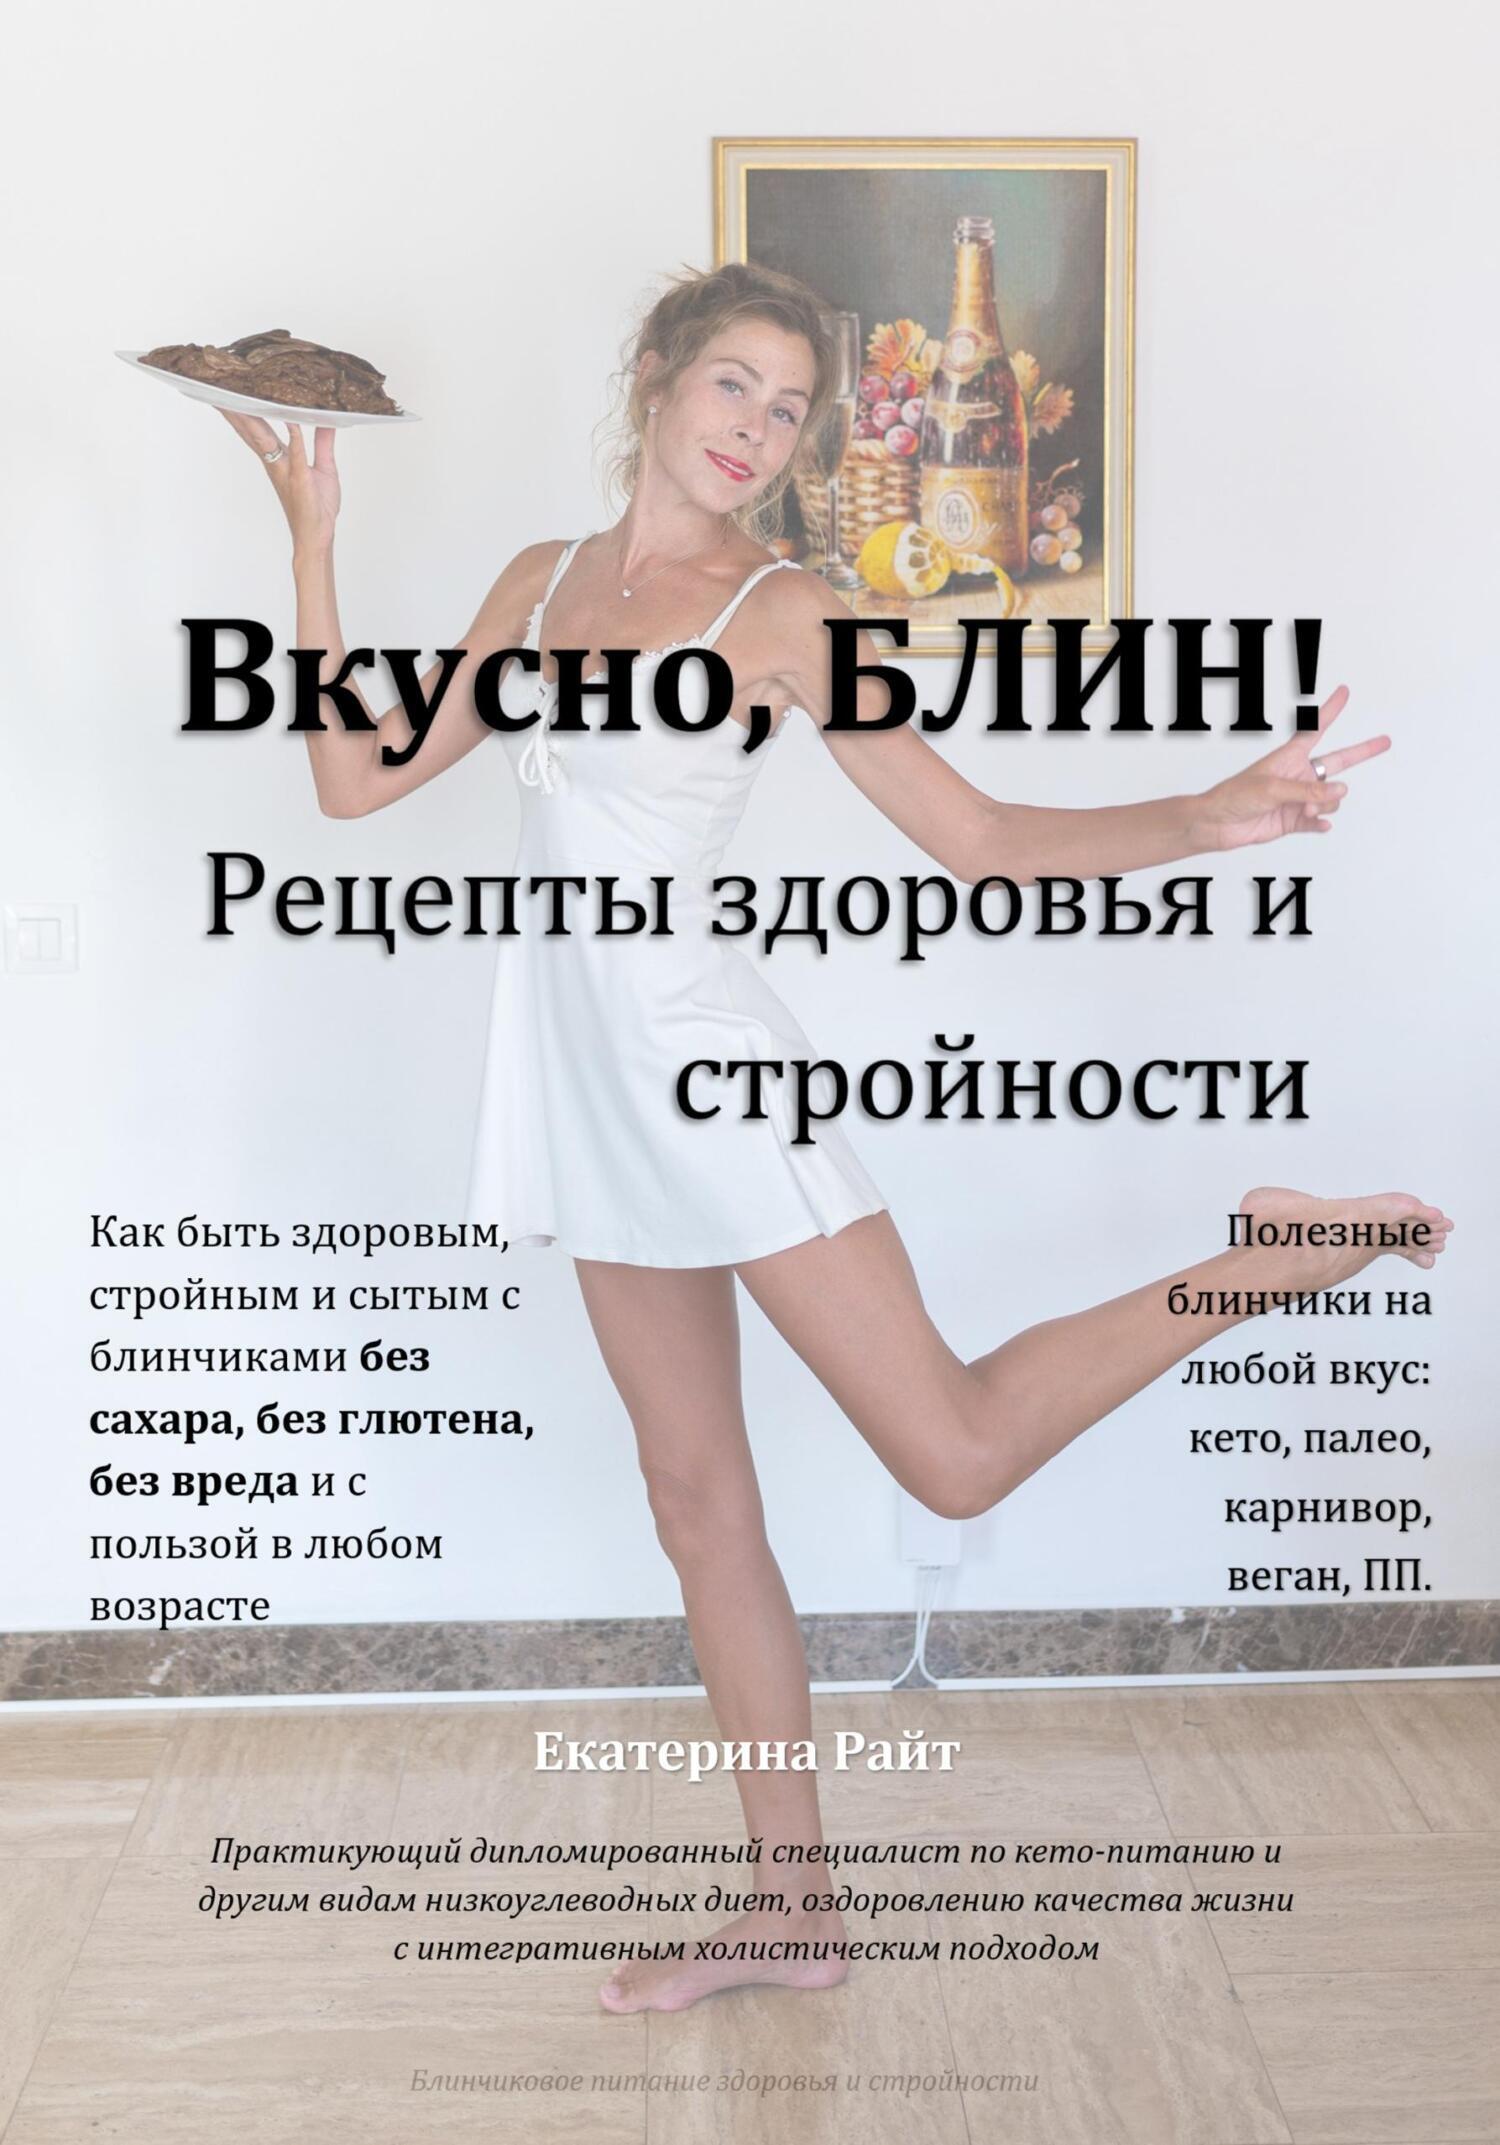 Рецепты стройности | ВКонтакте